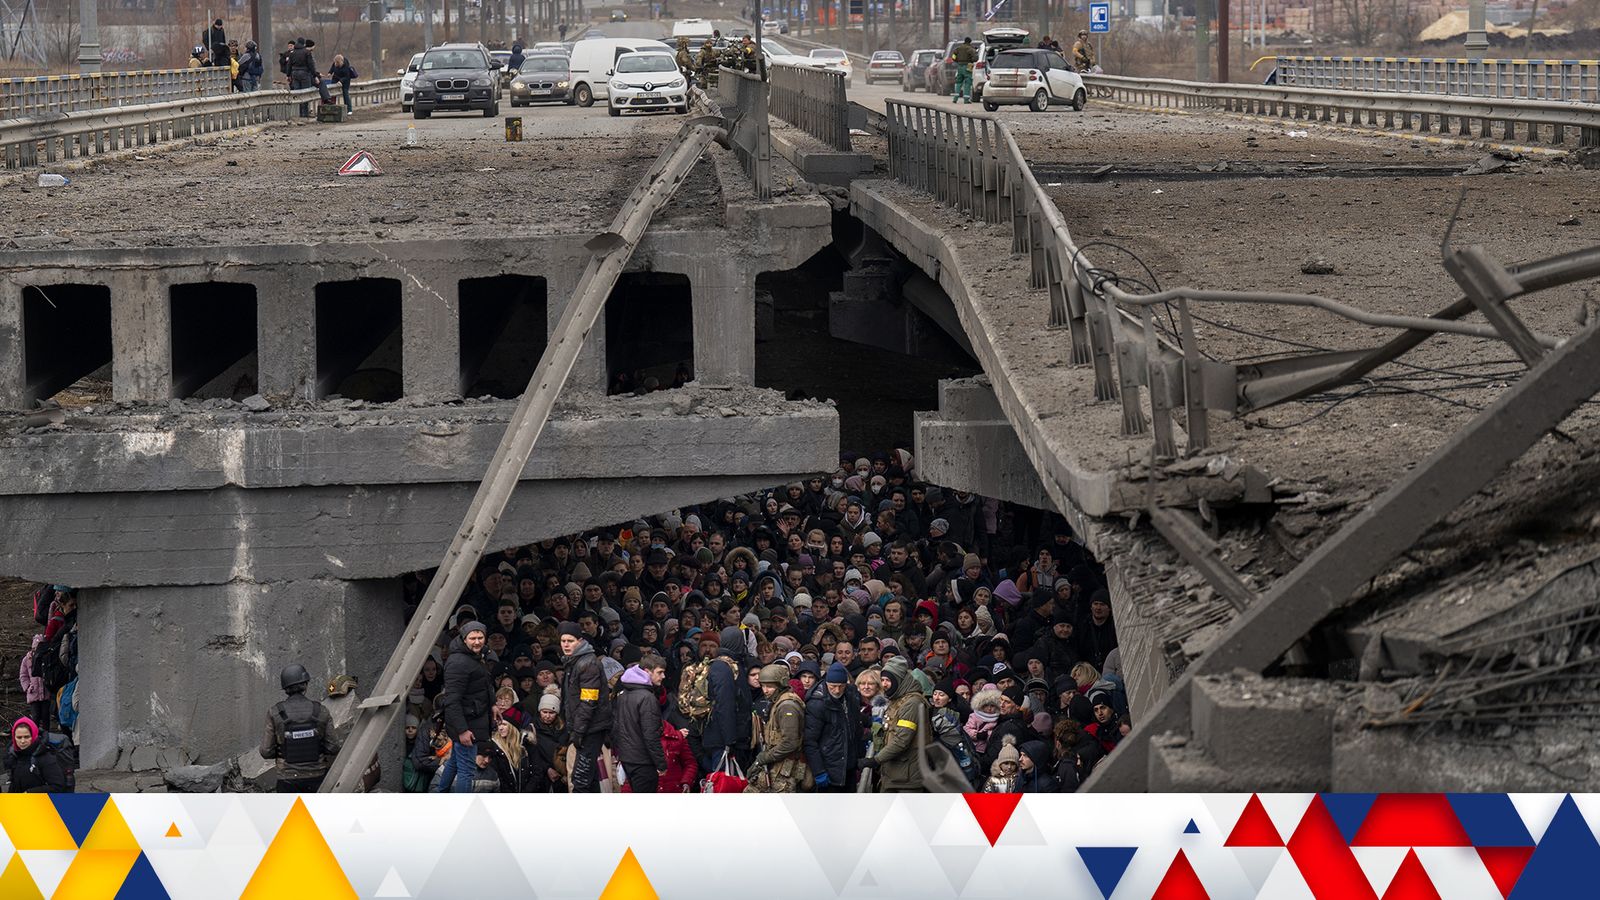 Ukraine-Russia latest news: Mariupol evacuation halted after ‘continued shelling’ despite ceasefire; Western sanctions akin to declaration of war, says Putin | World News